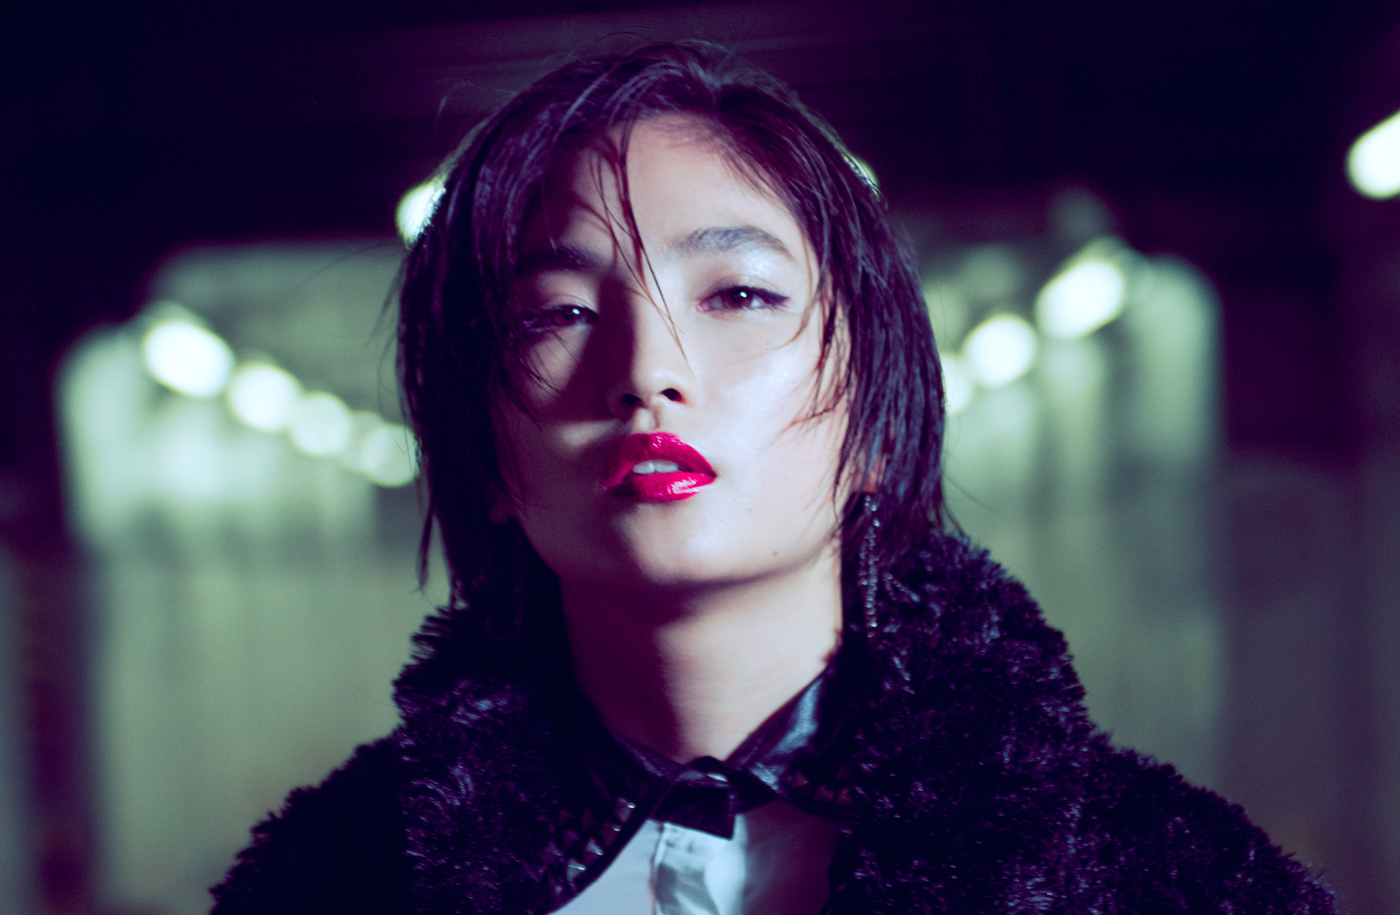 Fashion  Photography  Night Shoot tokyo actress portrait night streets cinematic night lights beauty